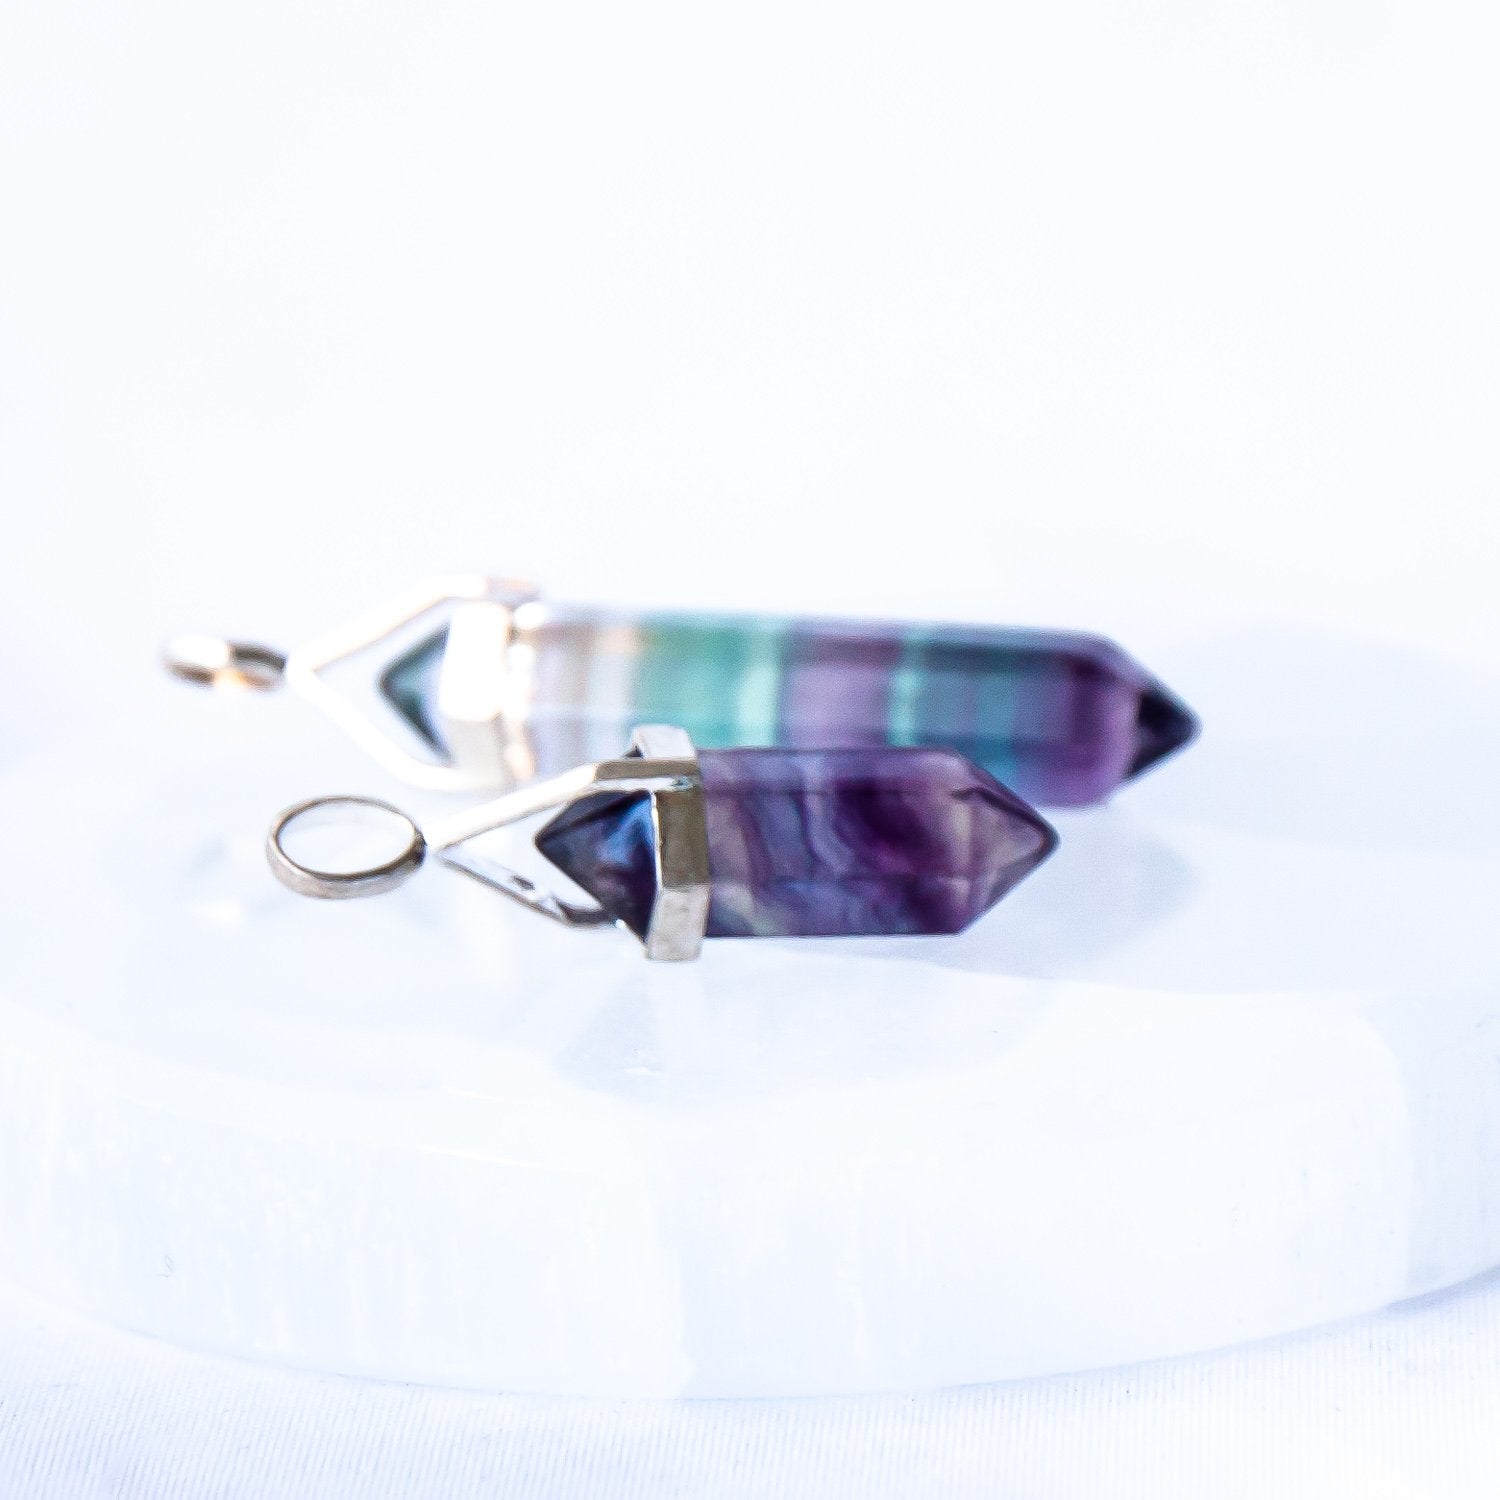 Fluorite crystal pendants. Small + medium.